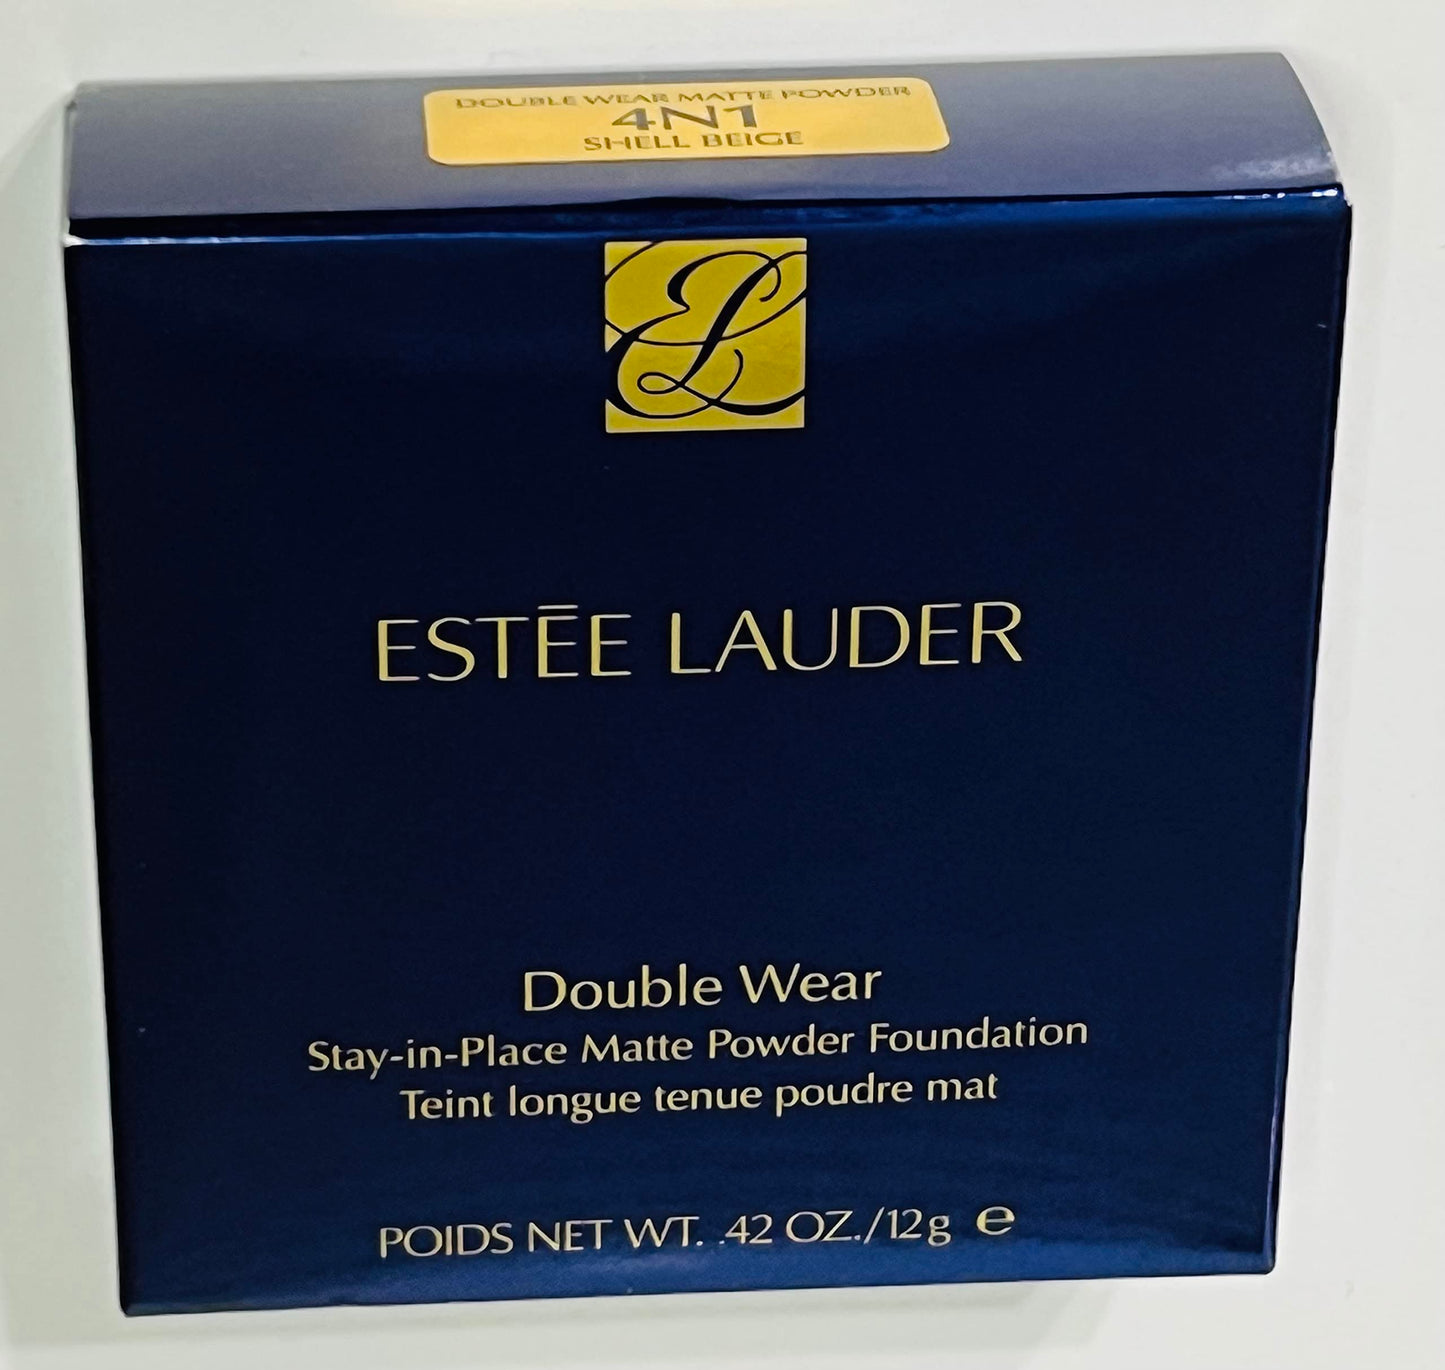 Estee Lauder Double Wear Stay-in-Place Matte Refillable Powder Foundation 4N1 Shell Beige, 0.42 oz/ 12 g